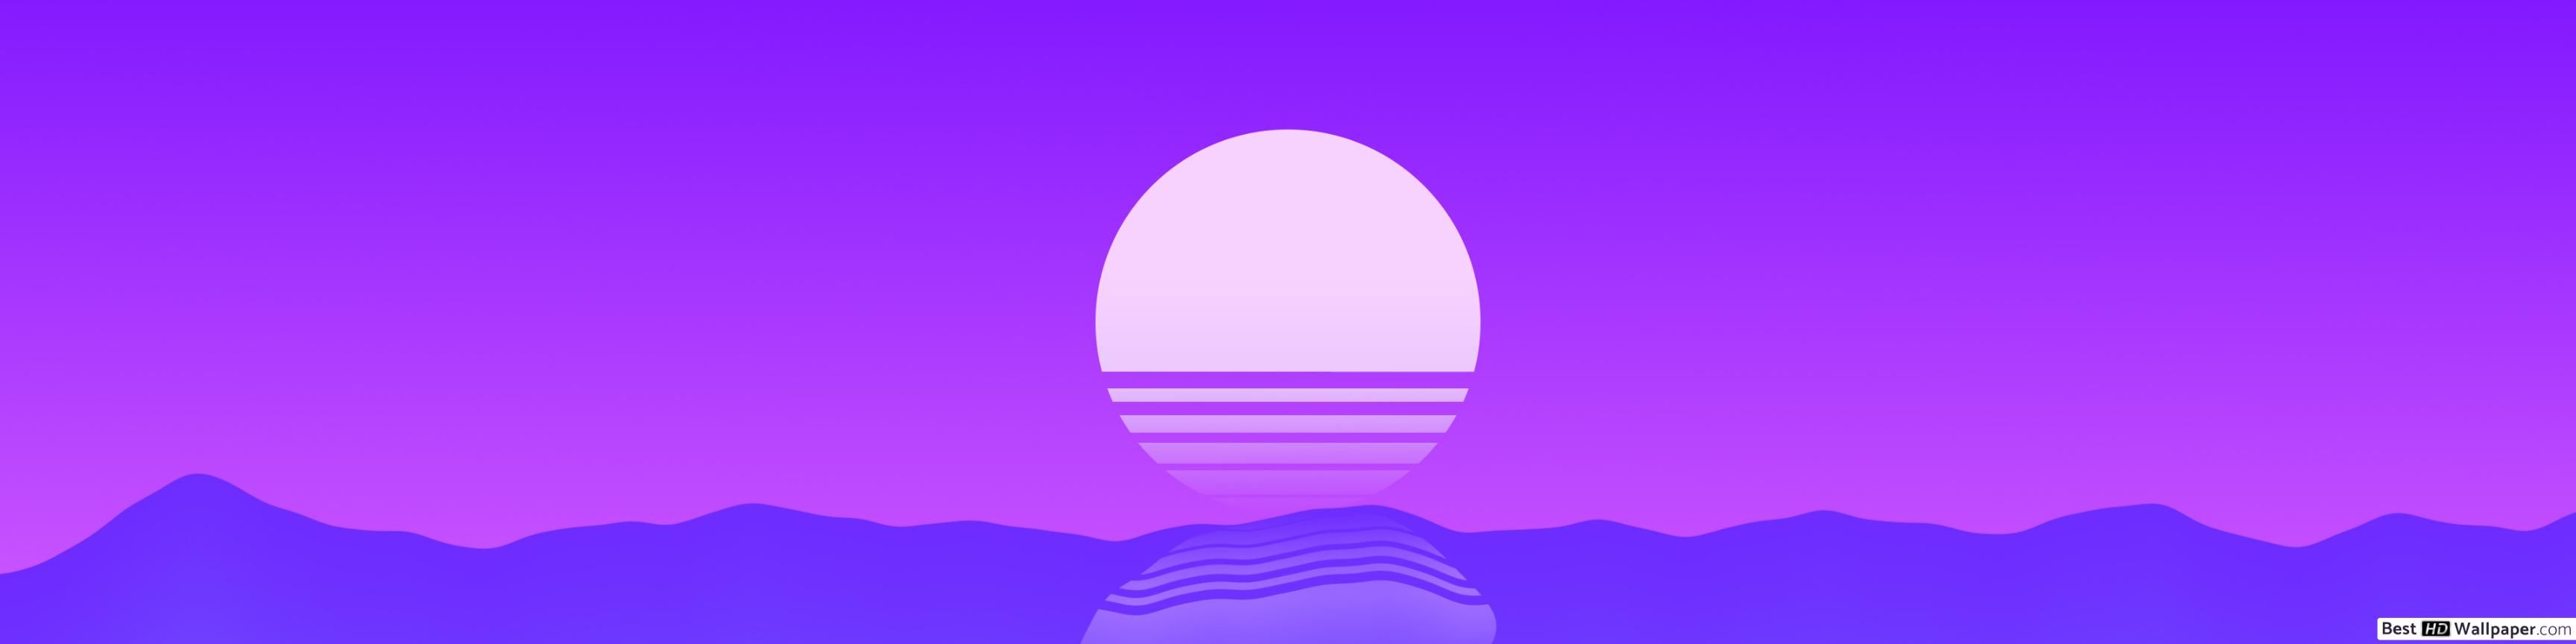 Retro sunset HD wallpaper download